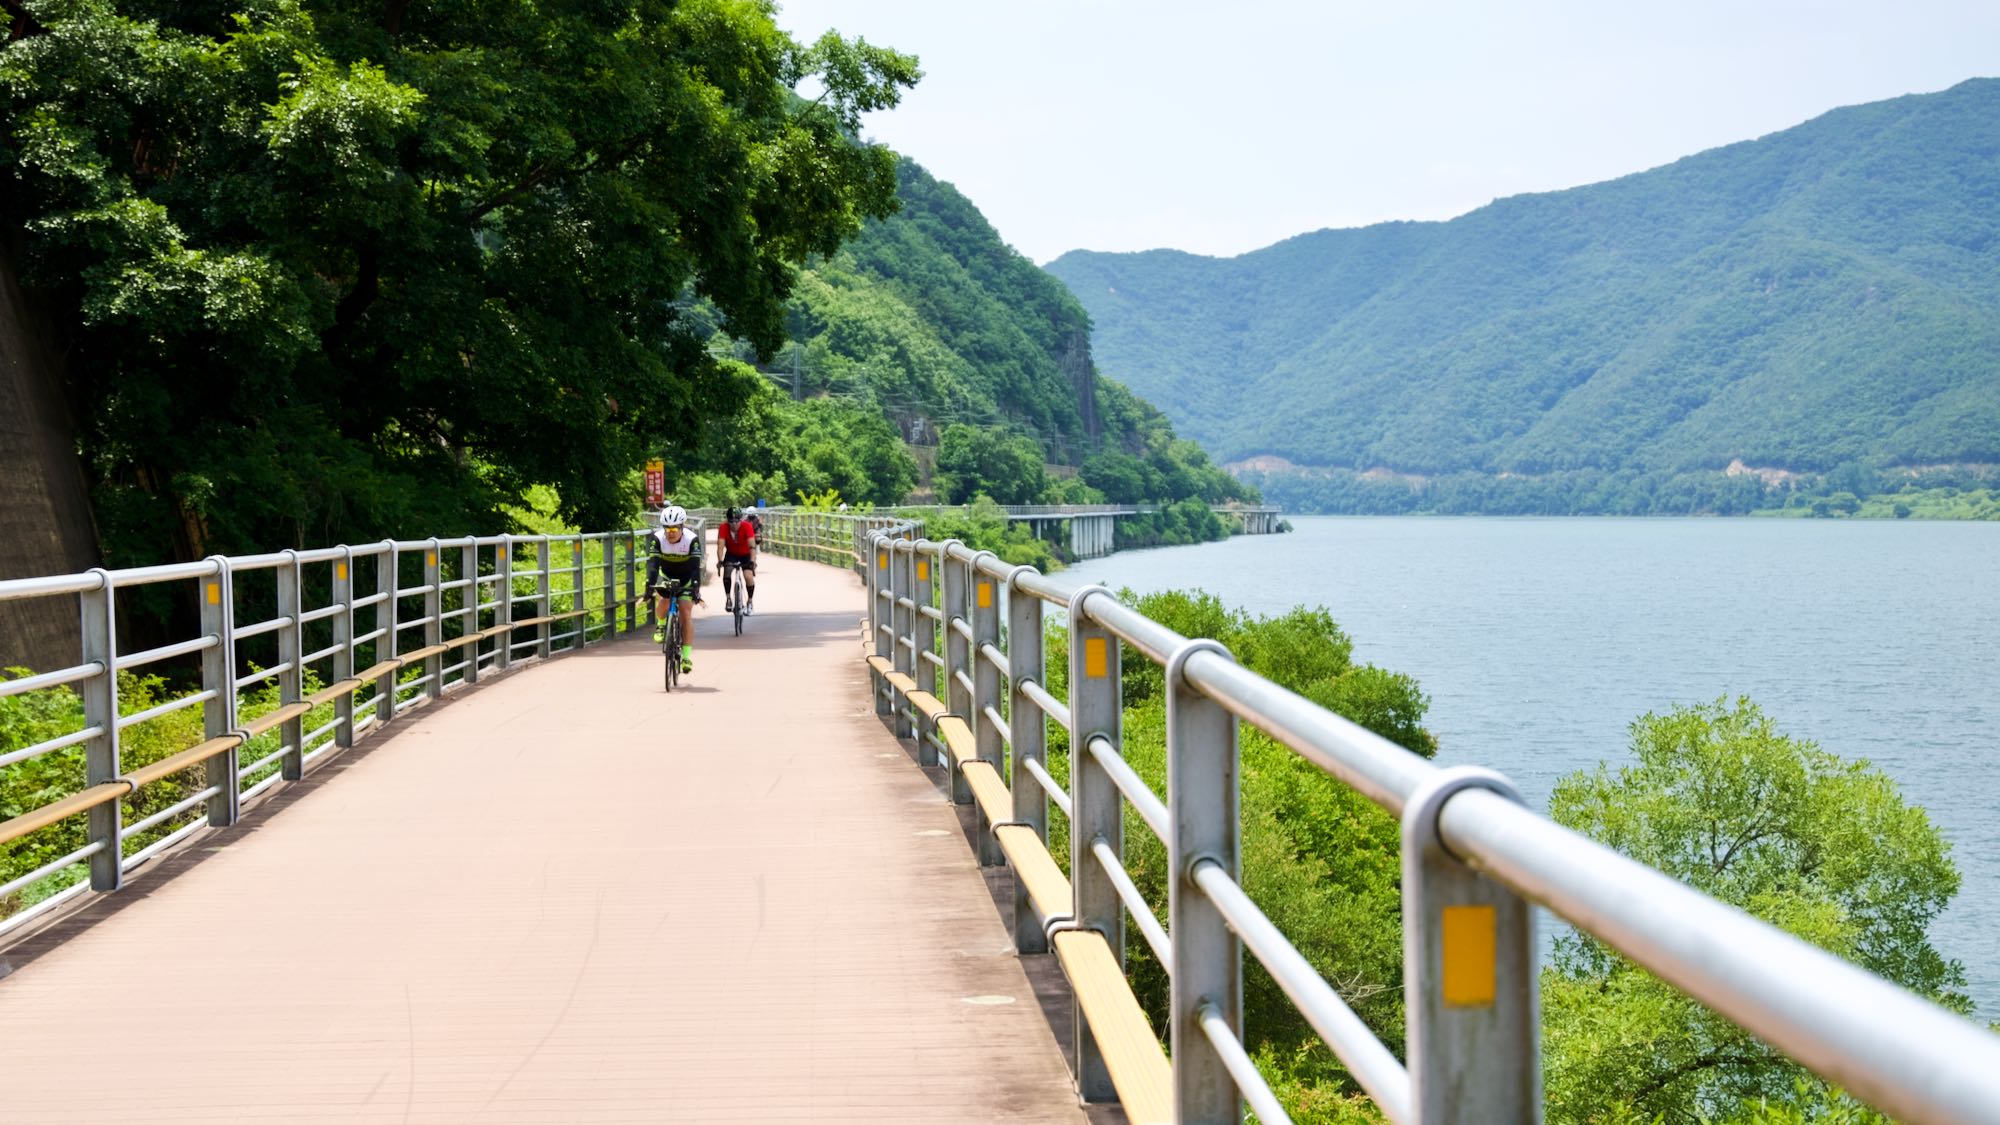 A picture of the boardwalk cycling paths along the Nakdonggang Bike Path (낙동강자전거길) in Samrangjin Town (삼랑진읍) along the Nakdong River (낙동강) in South Korea.